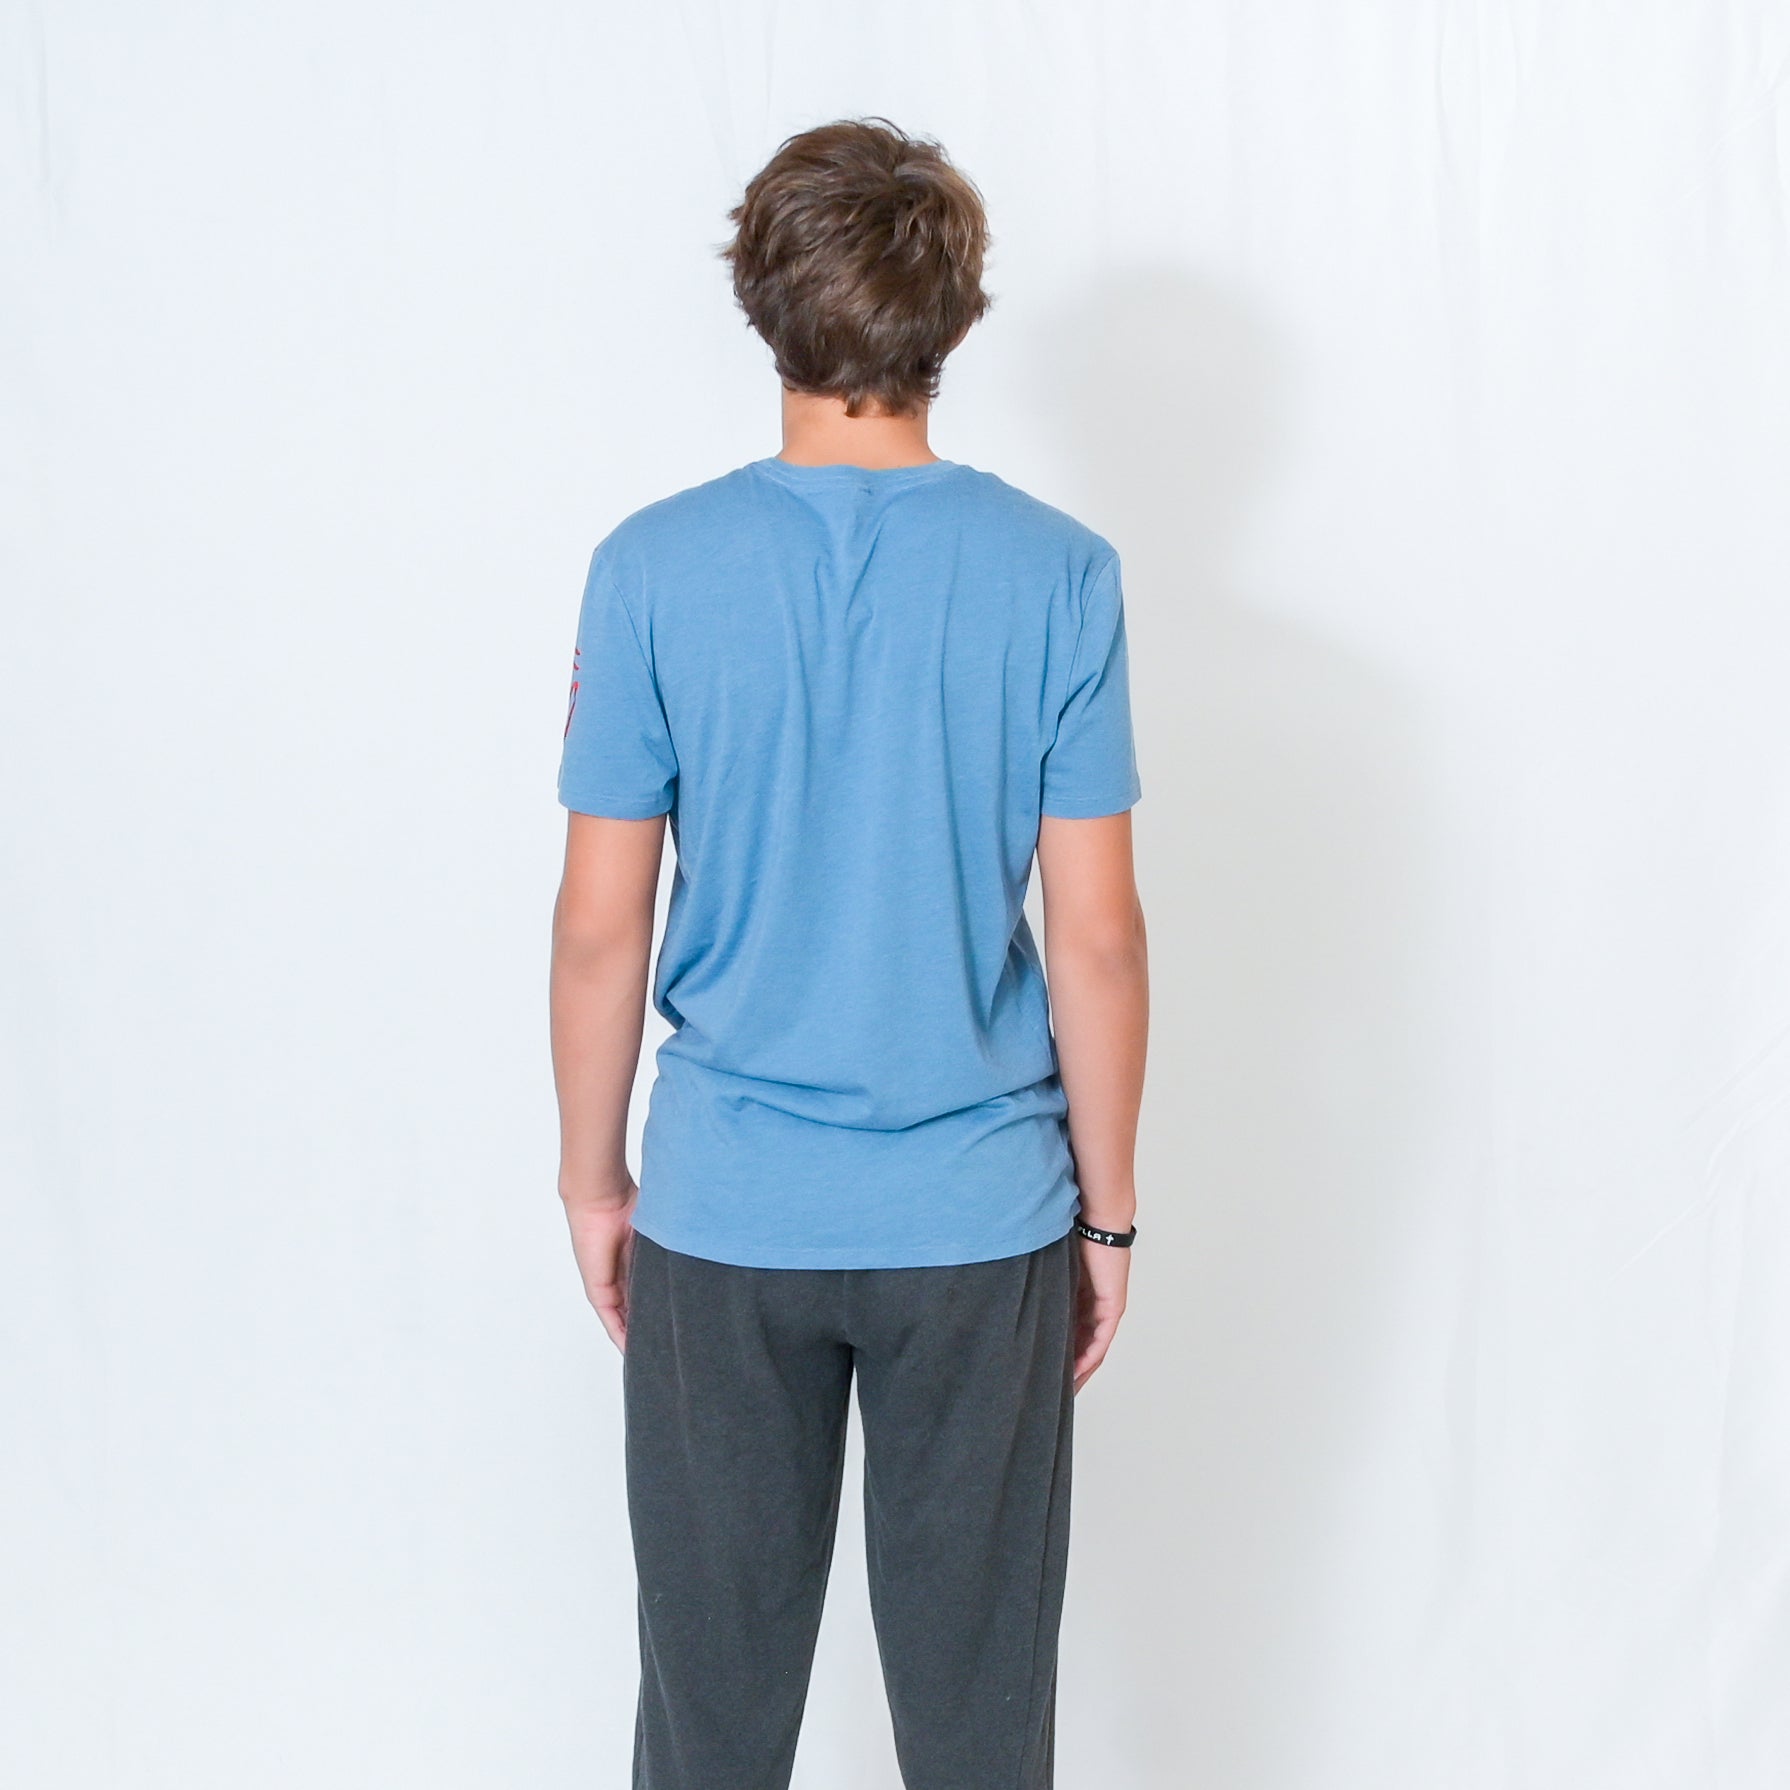 Shop Unisex the Heart Ari\'s BE THE Denim | Sleeve Light + Be – T-Shirt Blue LIGHT Short